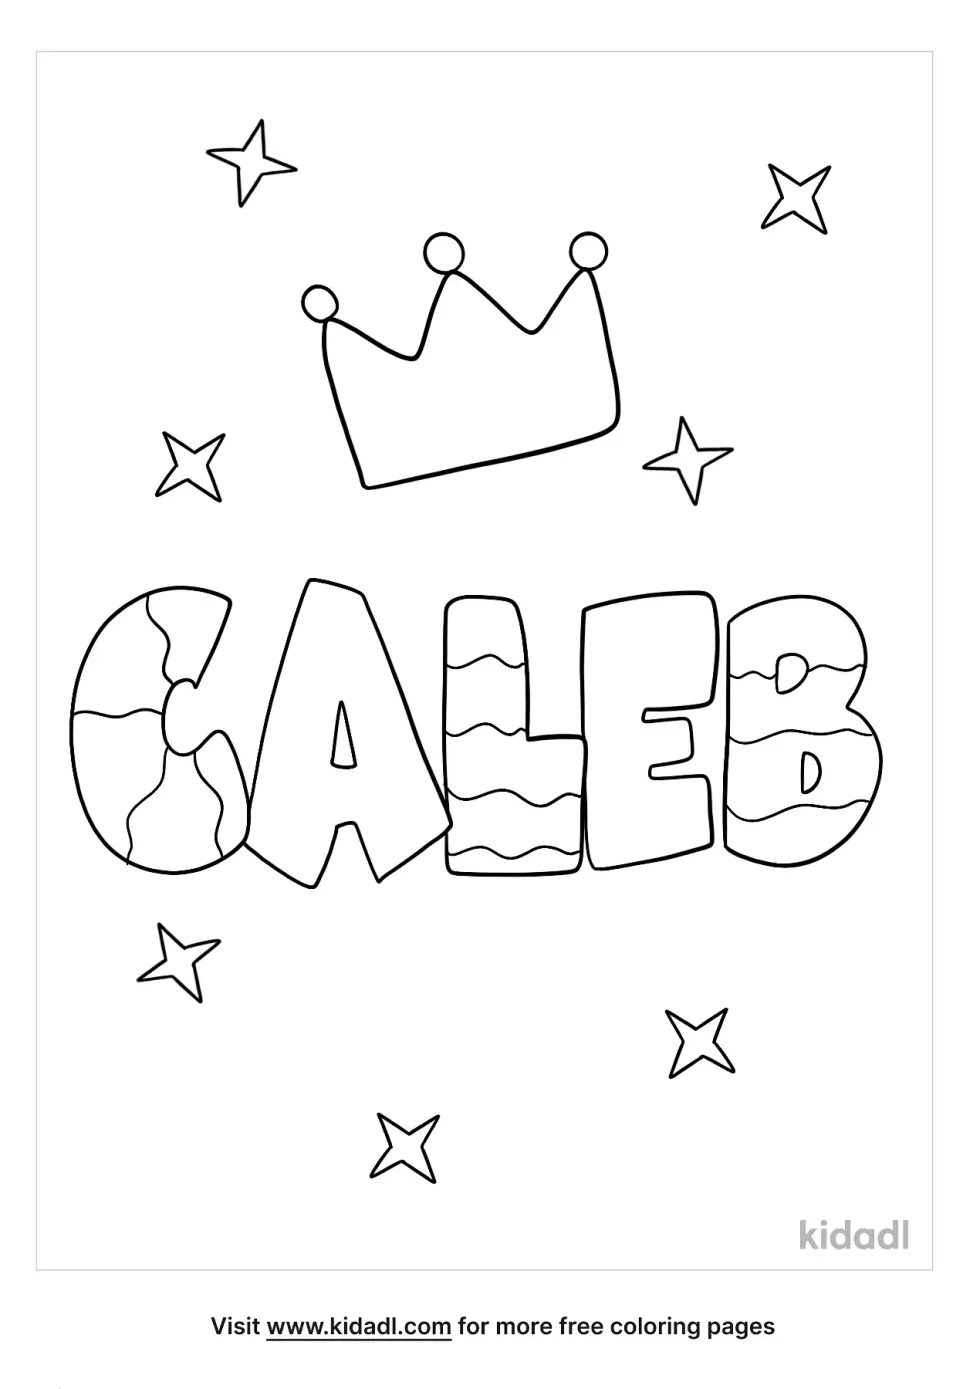 Caleb Name Coloring Page